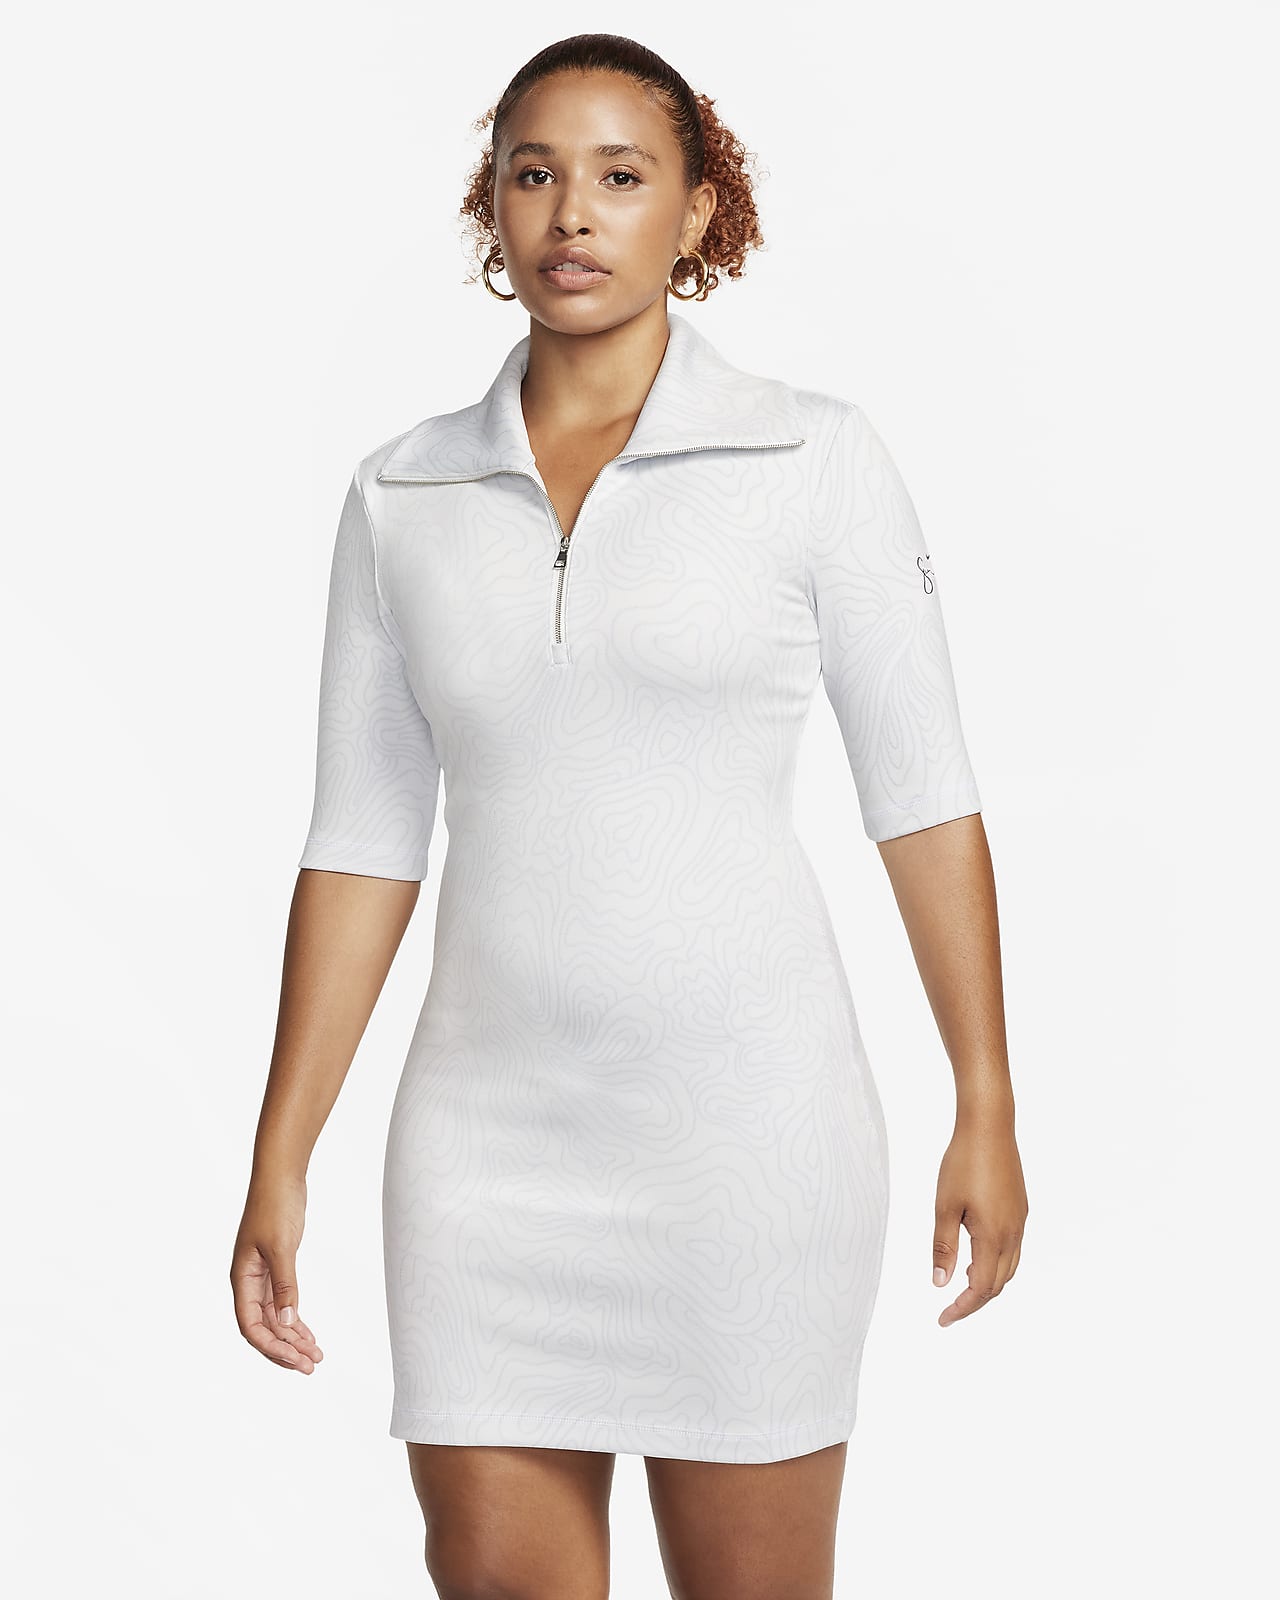 Serena Williams Design Crew Women's Jacquard Knit Mini Dress.